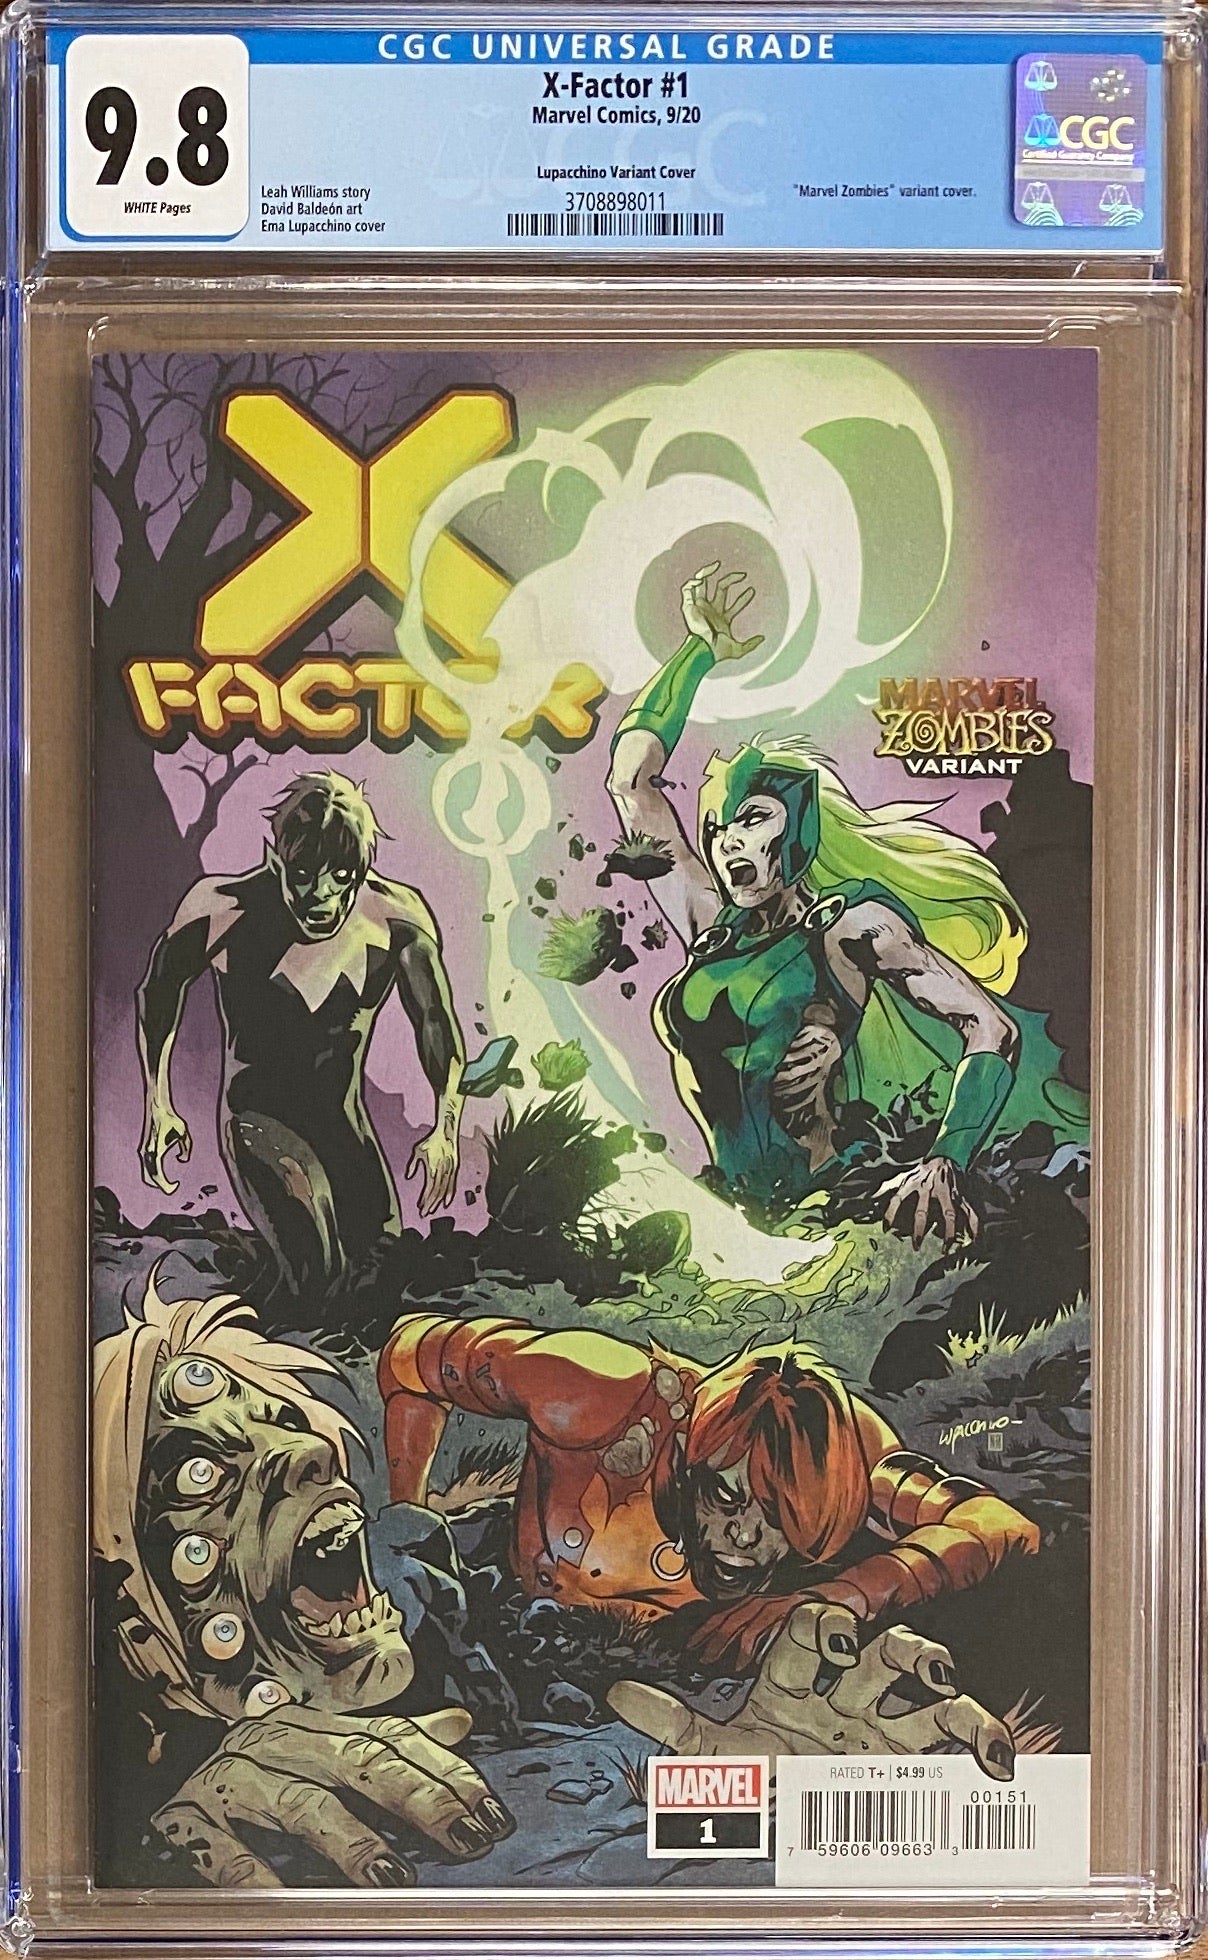 X-Factor #1 "Zombies" Variant CGC 9.8